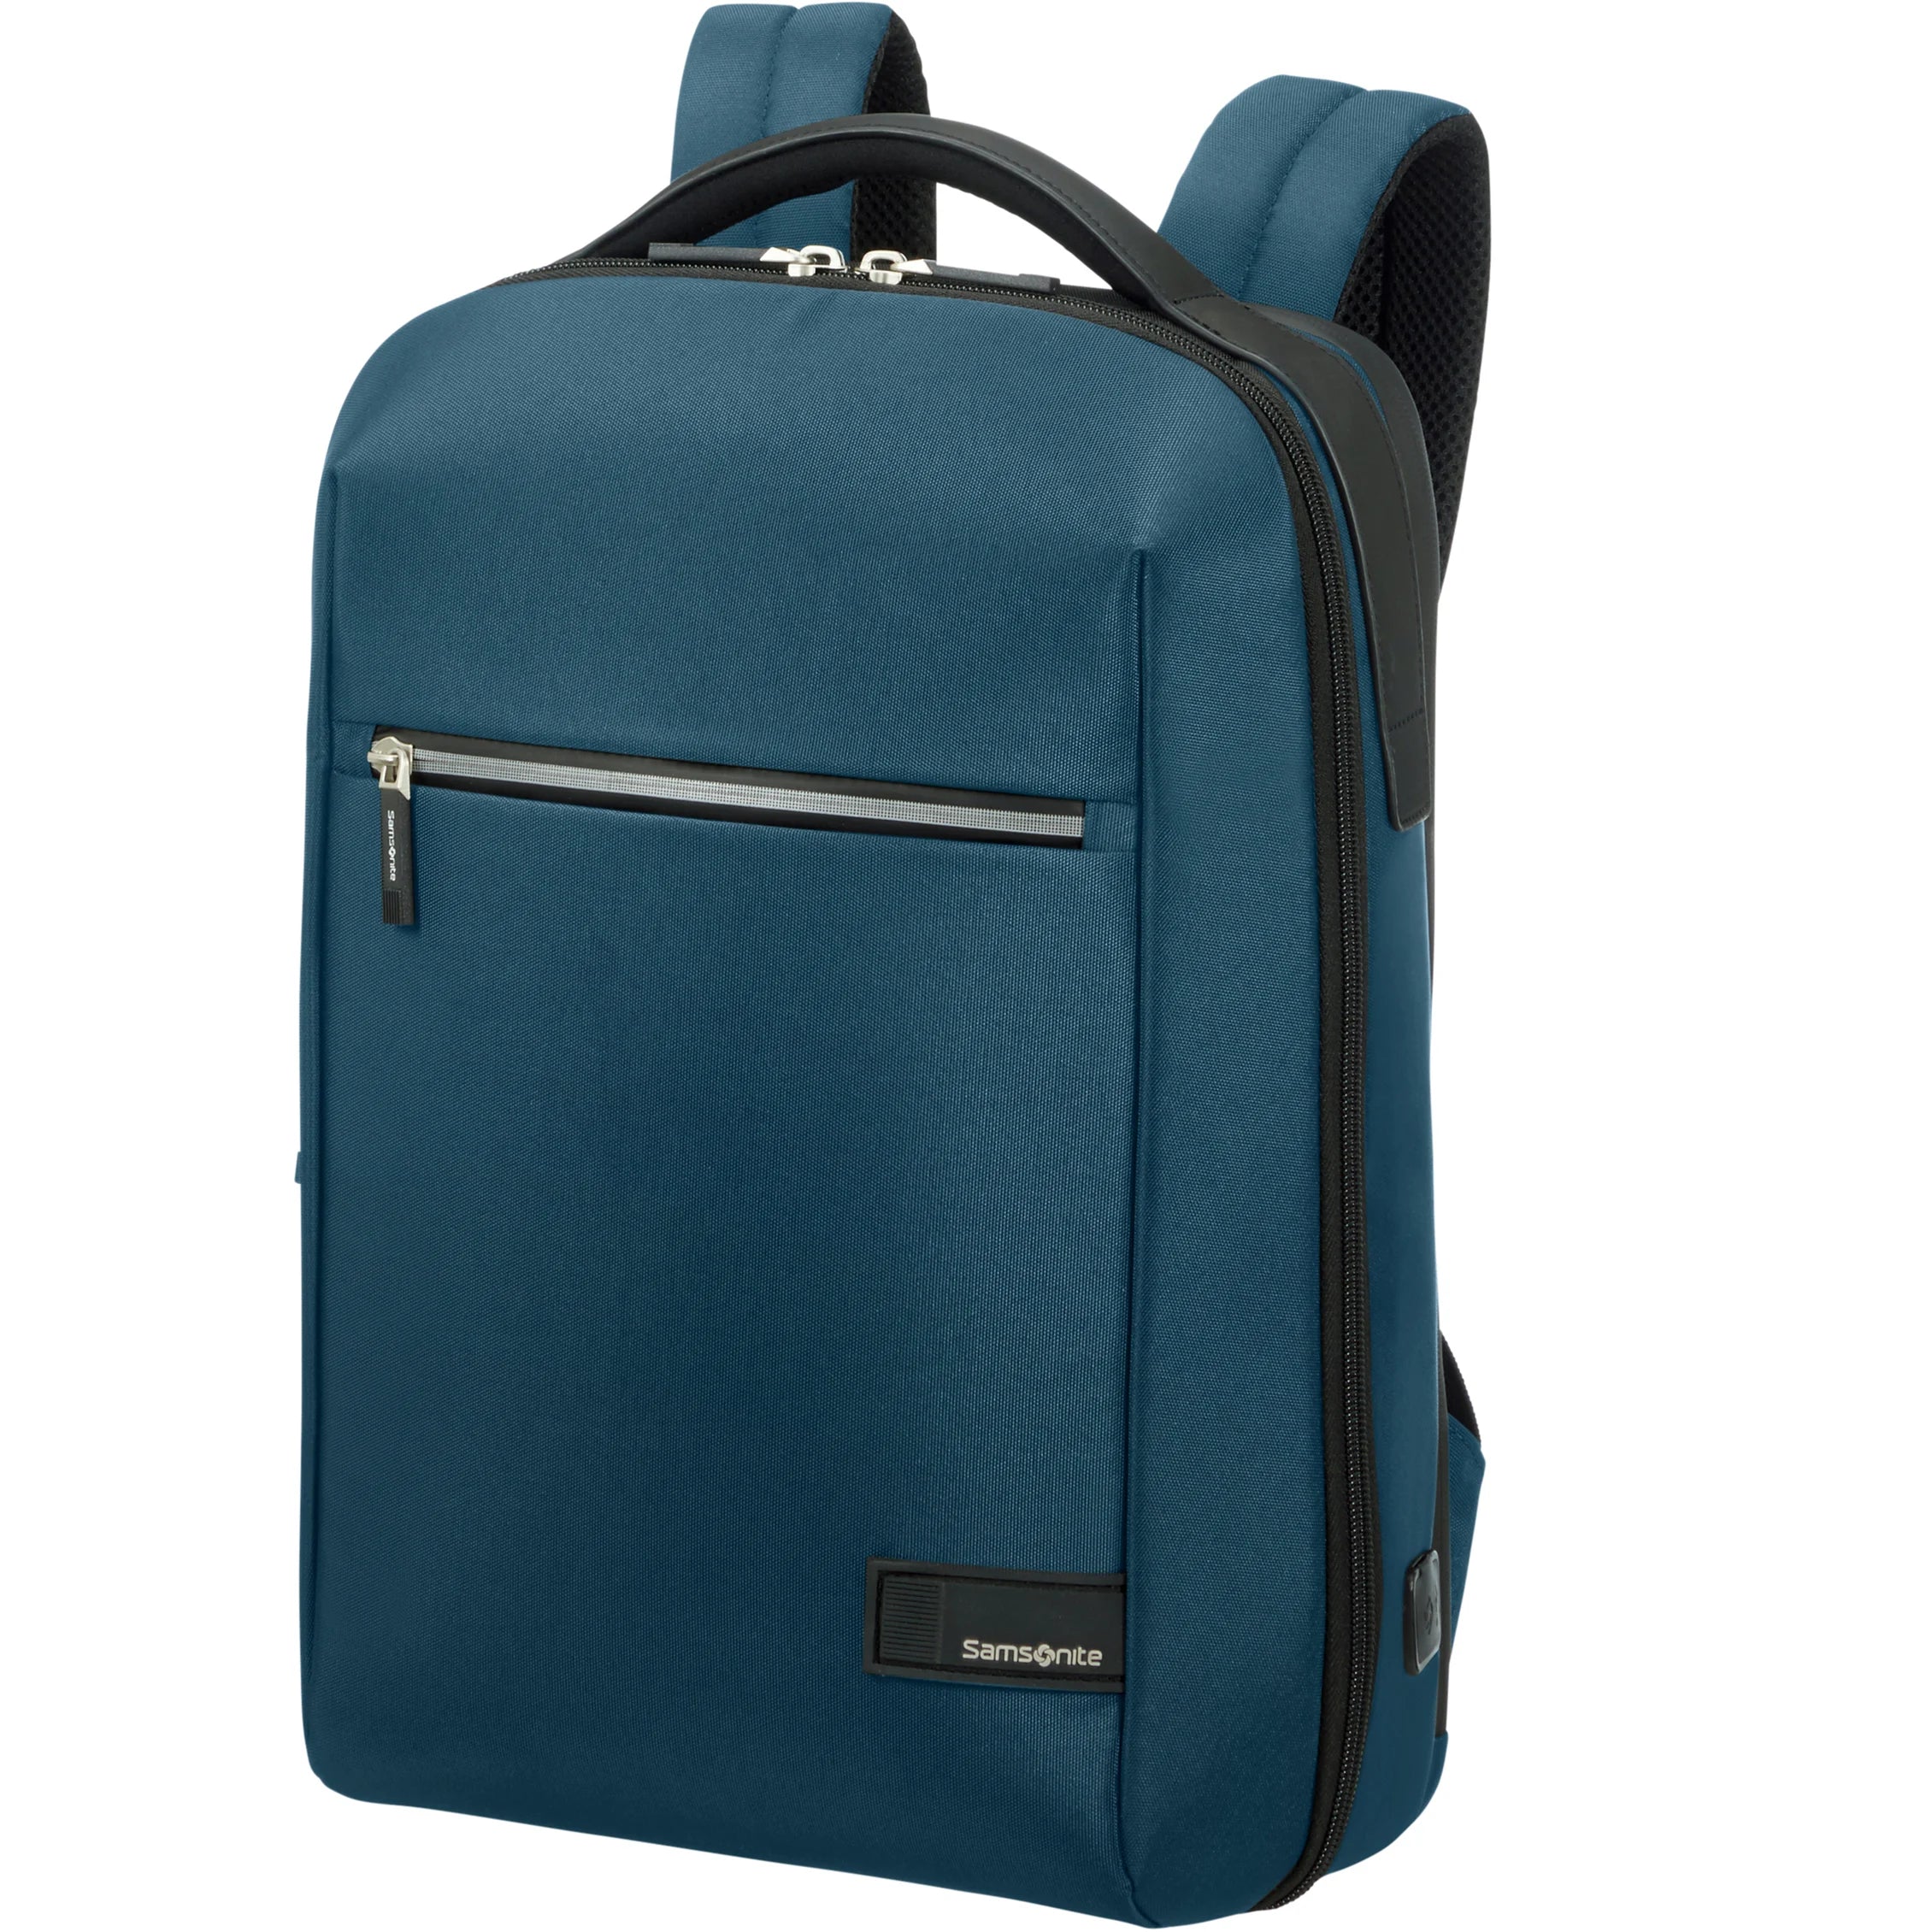 Samsonite Litepoint Laptop Backpack 41 cm - Peacock